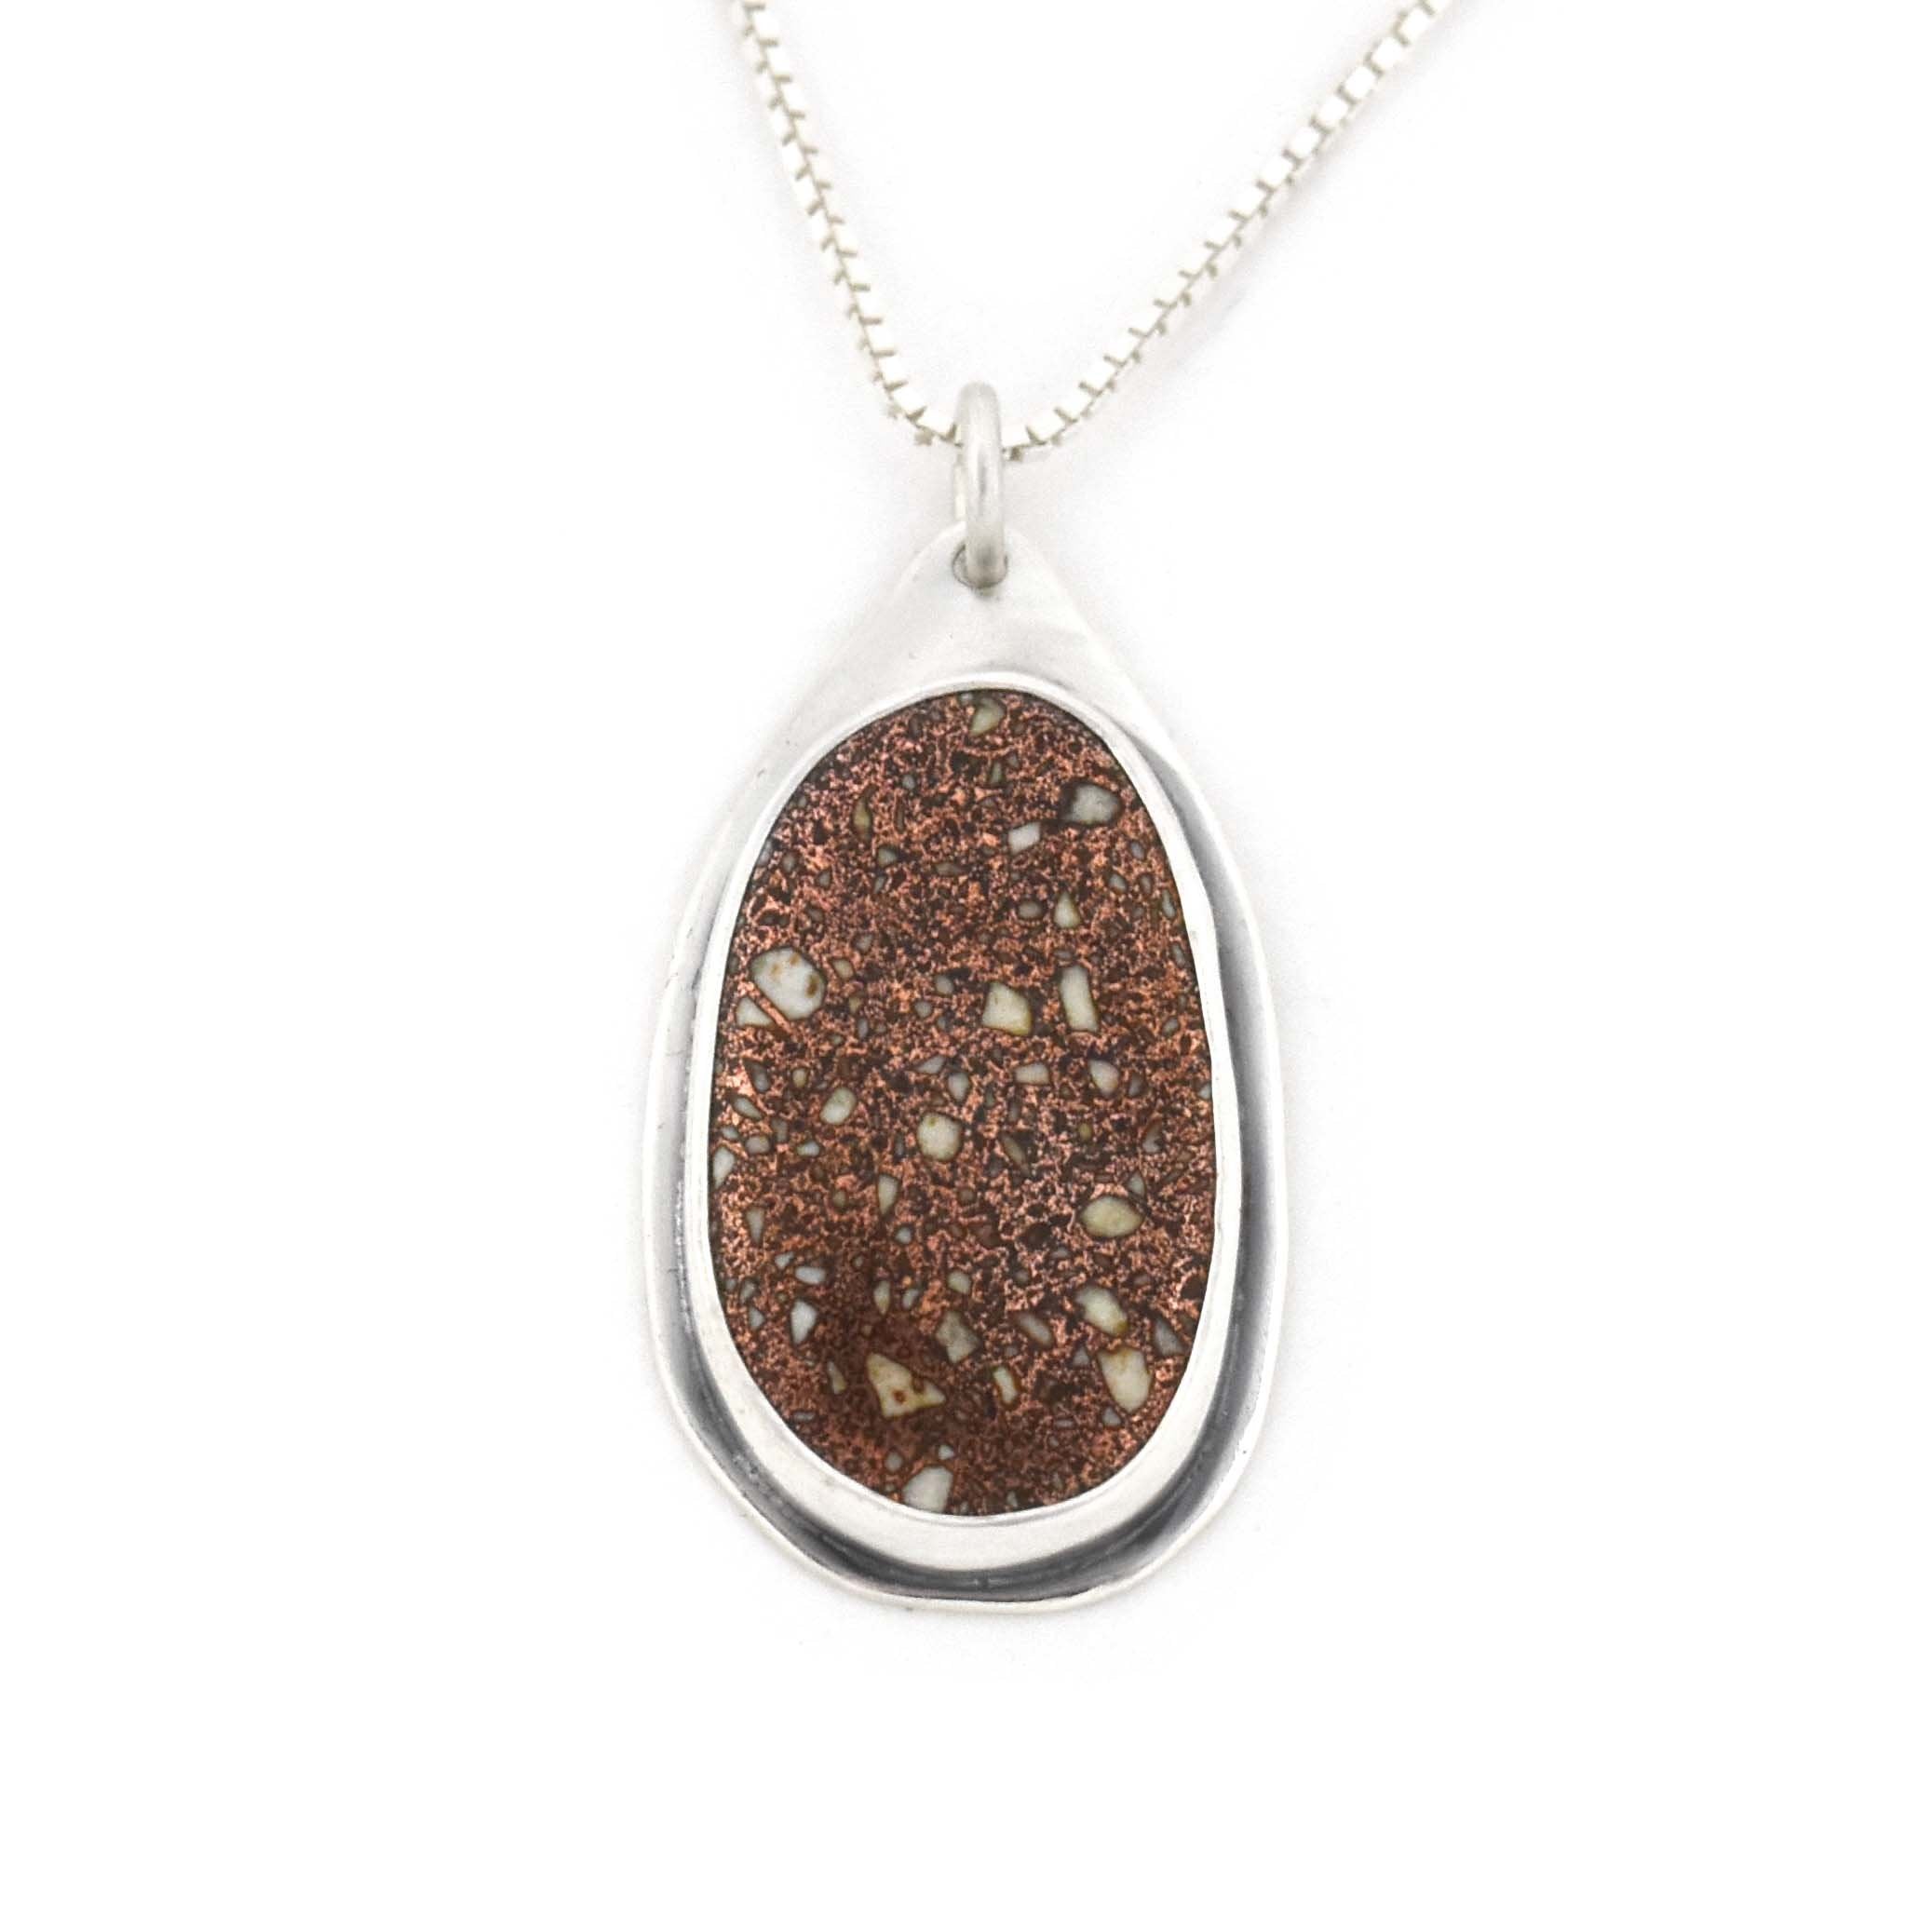 Copper Firebrick Drop Pendant No. 1 - Silver Pendant   5590 - handmade by Beth Millner Jewelry